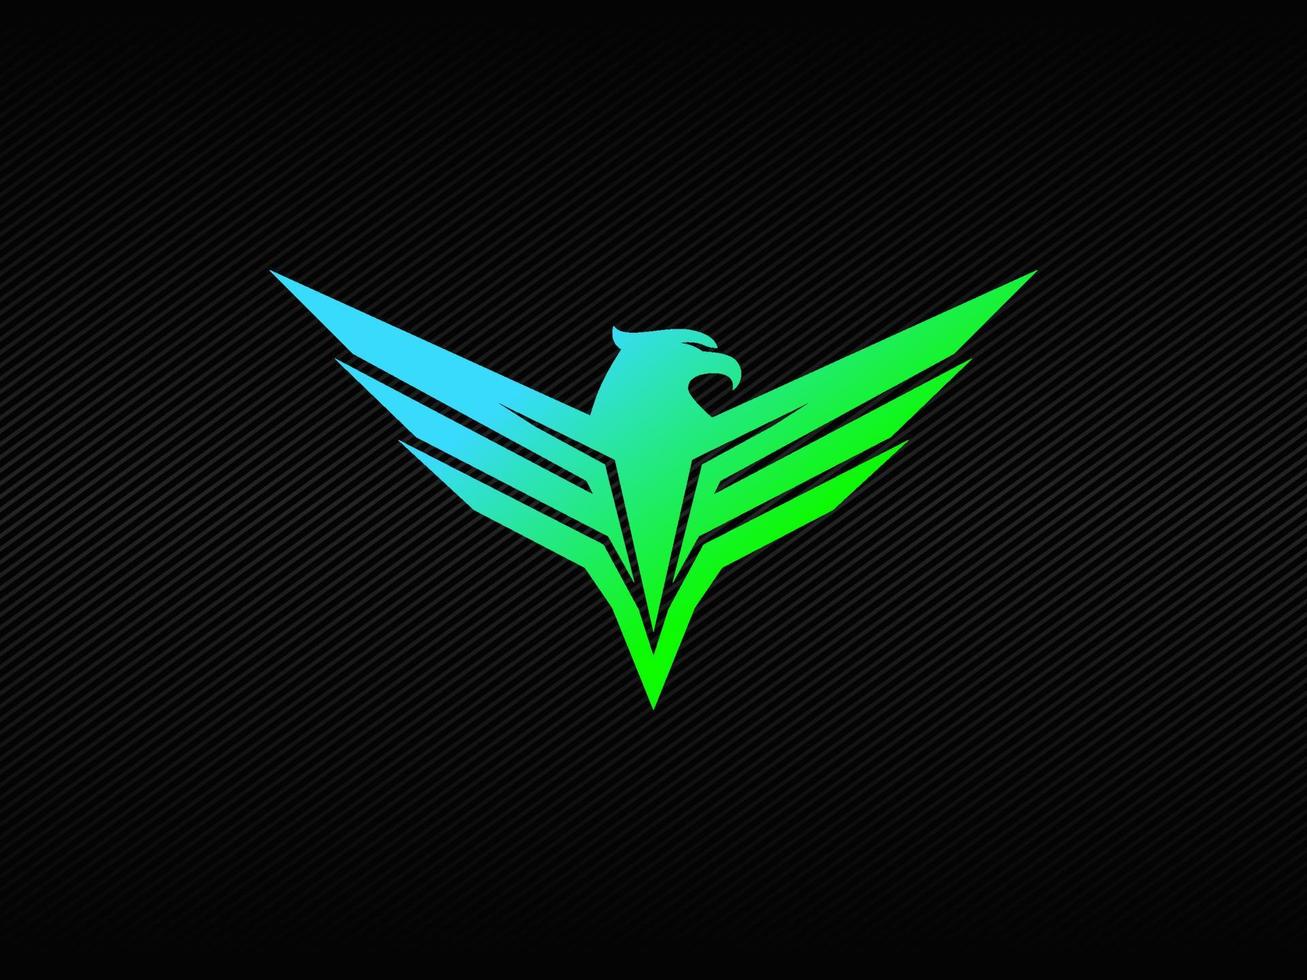 modern adelaarsbadge-logo met blauwe en groene rgb-kleuren vector